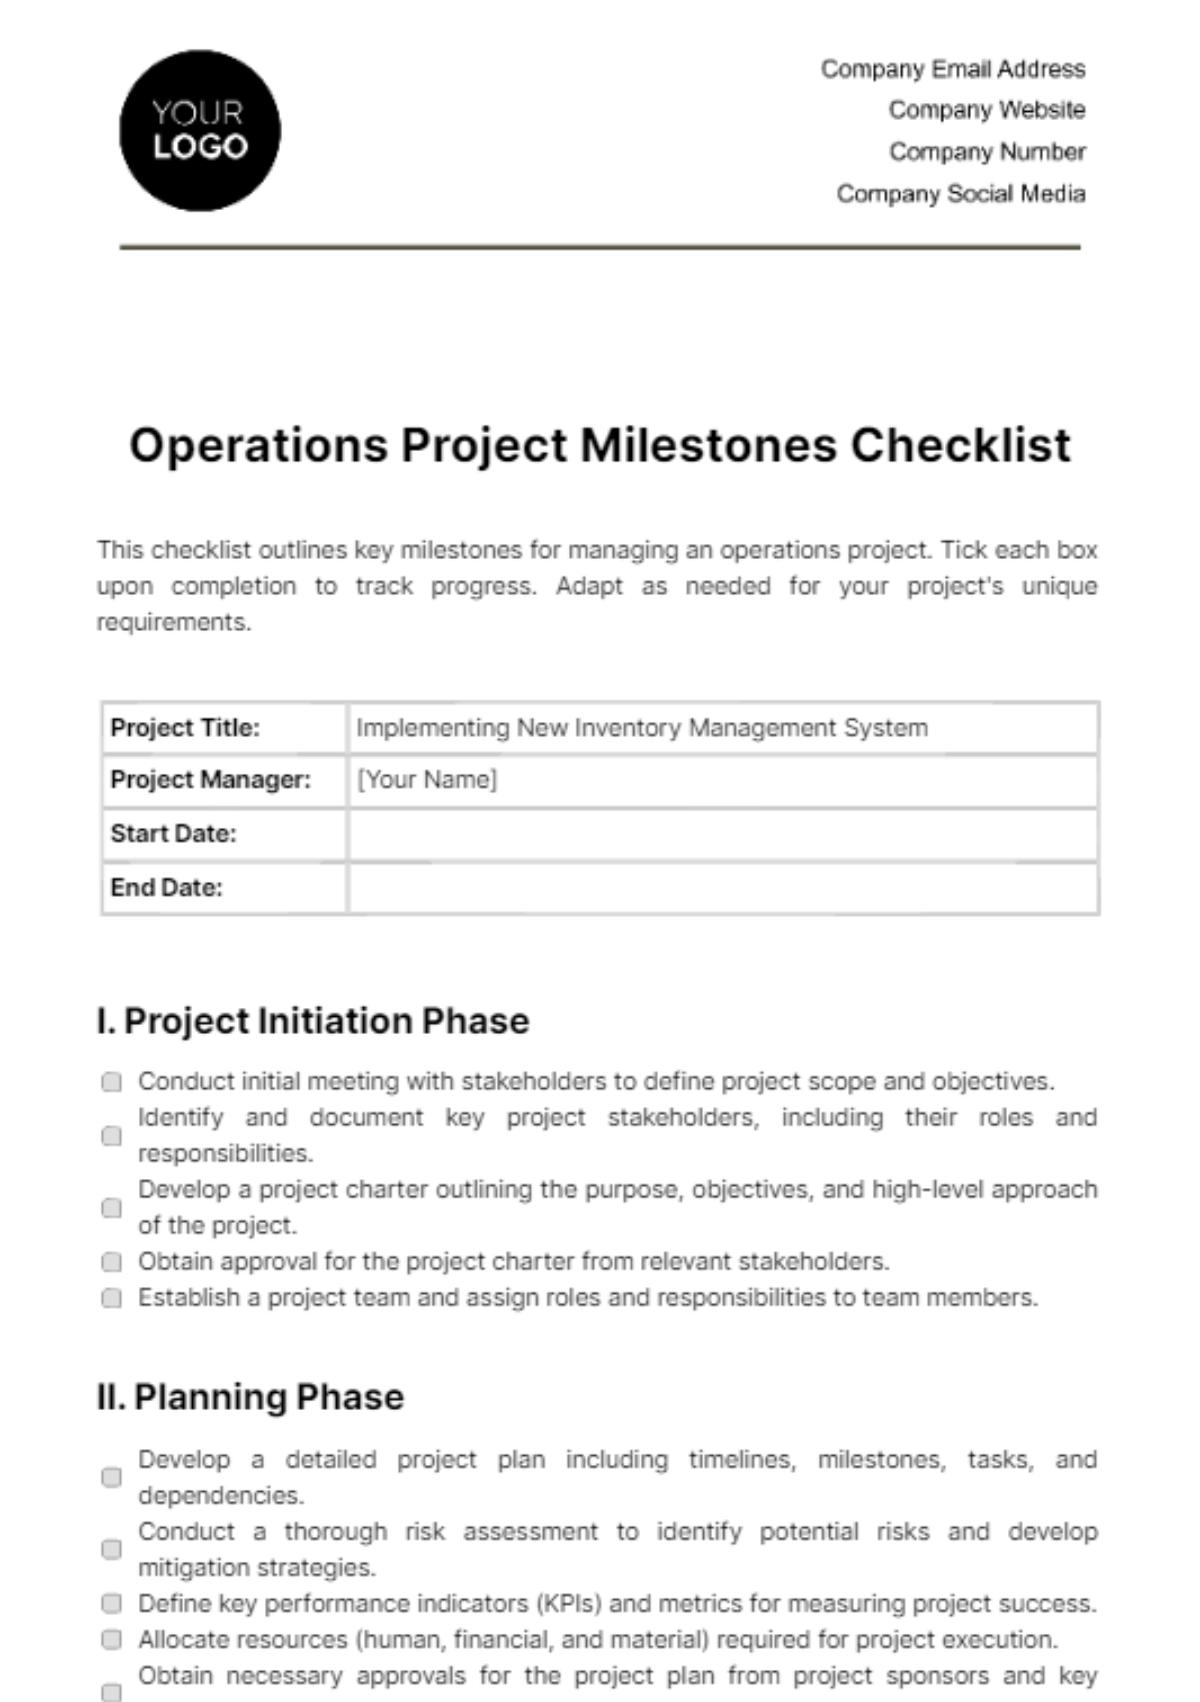 Operations Project Milestones Checklist Template